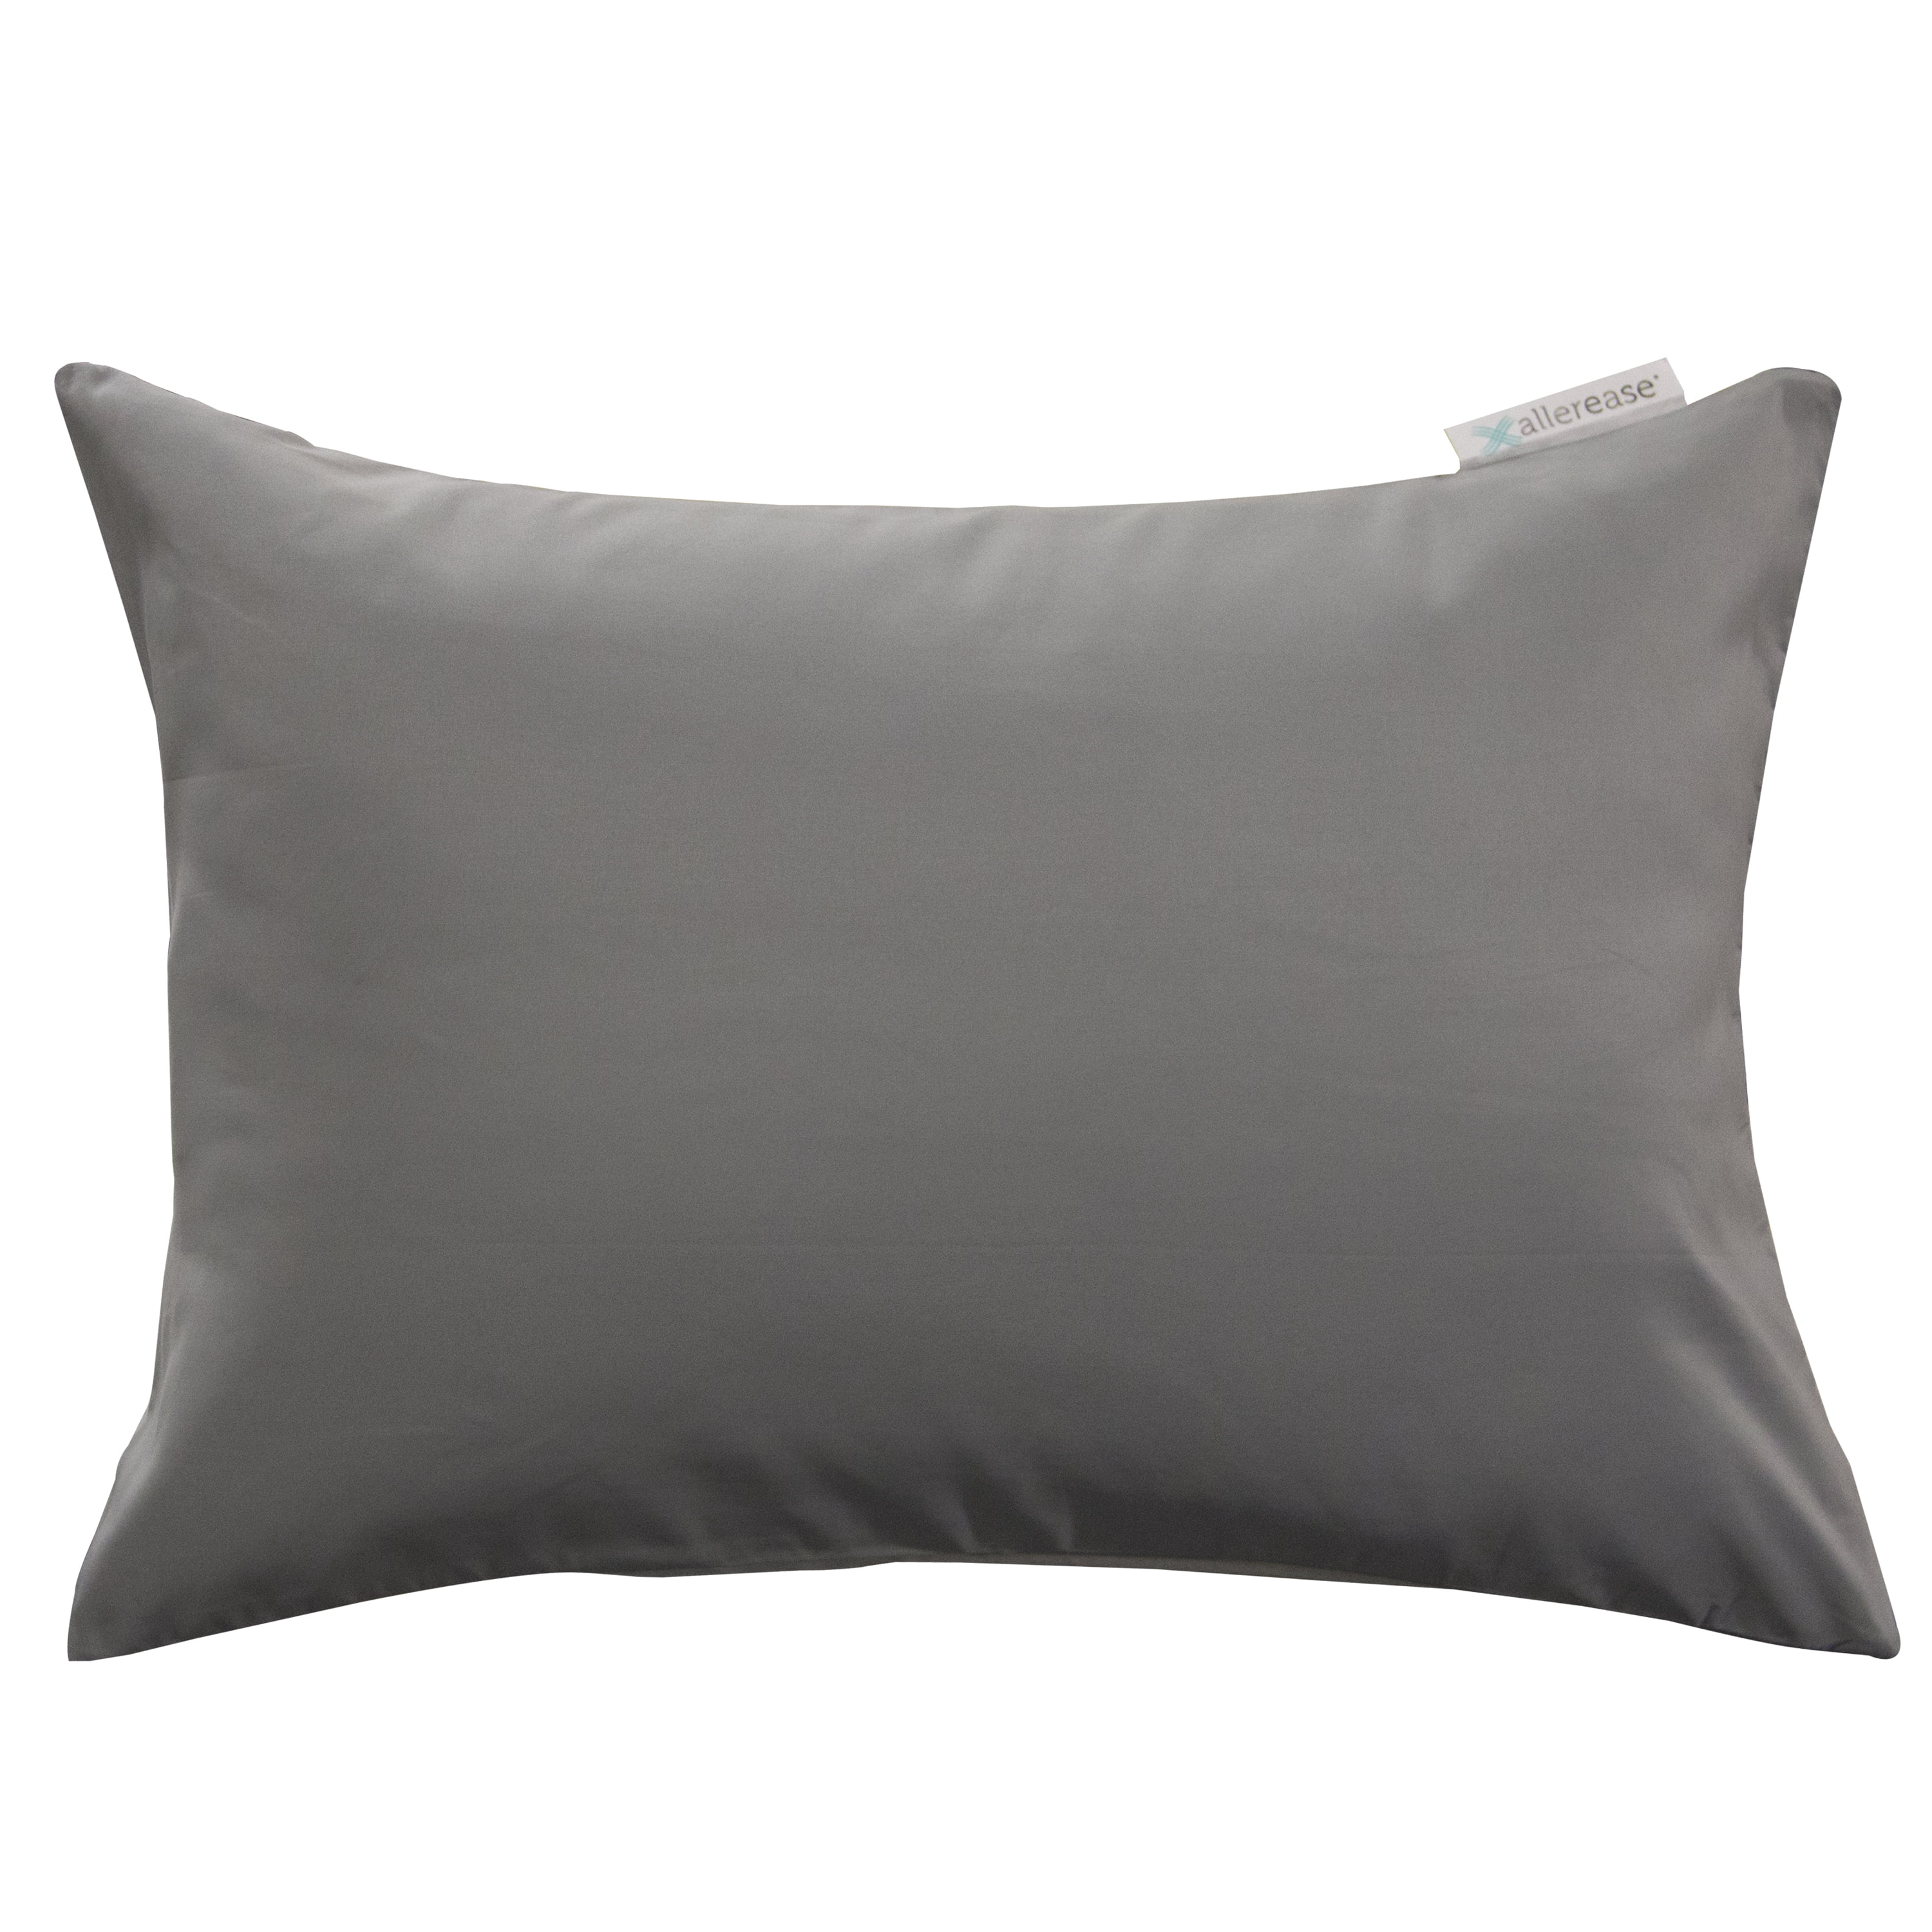 Aller Ease Allerease 14 X 20 Zippered Travel Pillow Protector